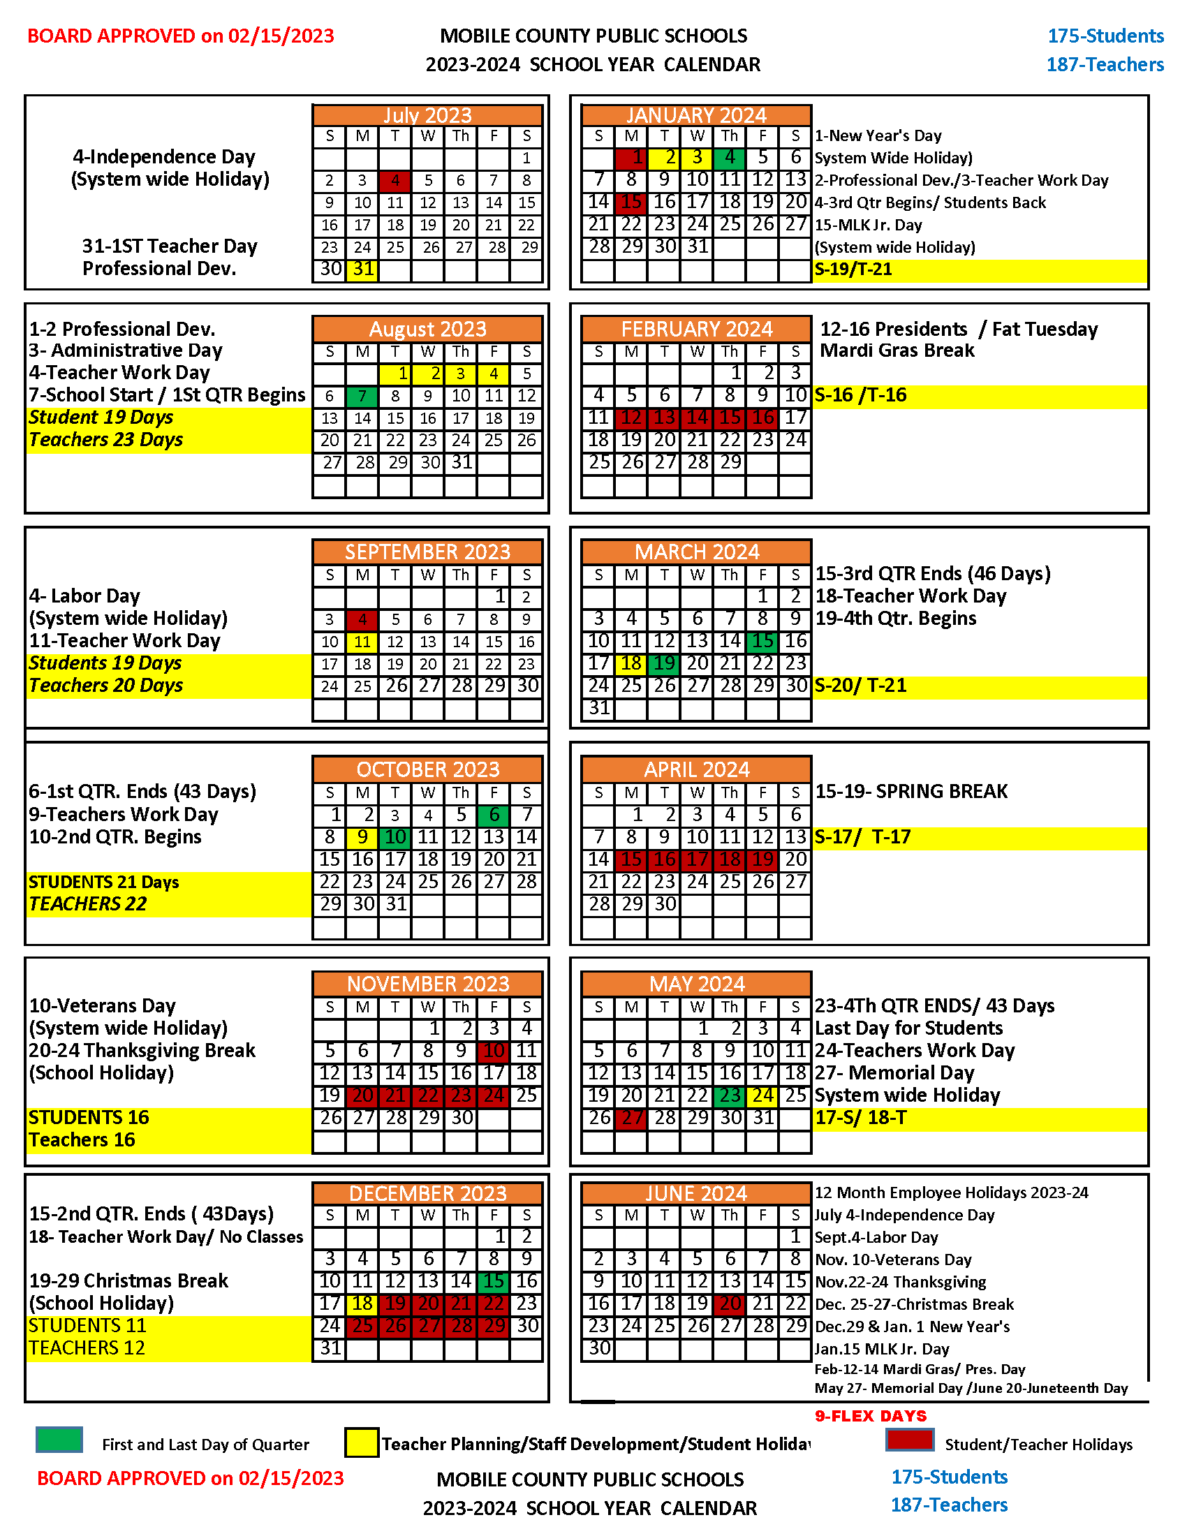 Mobile County Public Schools Calendar 20232024 in PDF